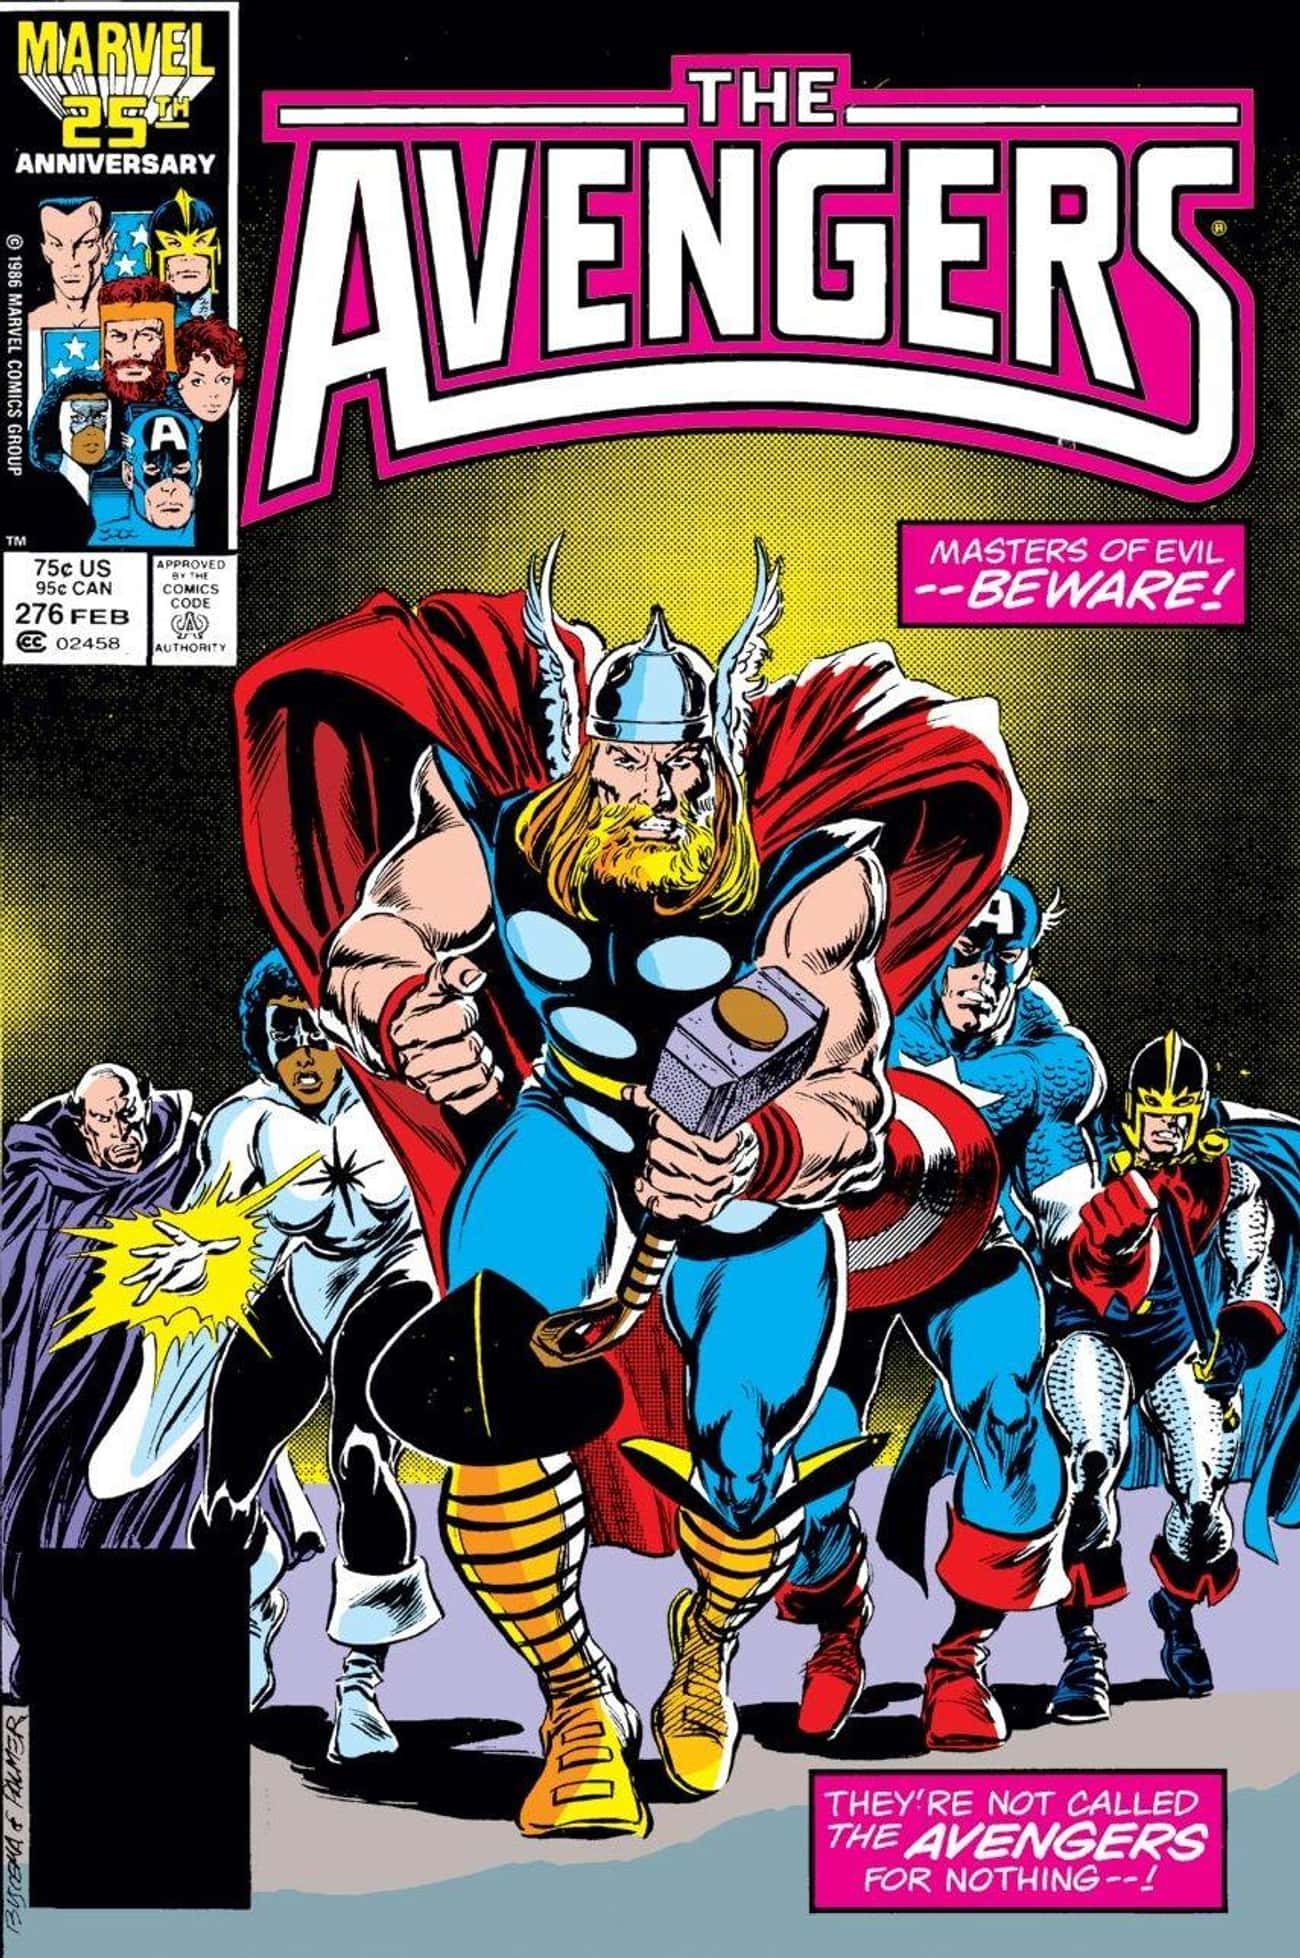 Marvel Comics: Best Captain America storylines